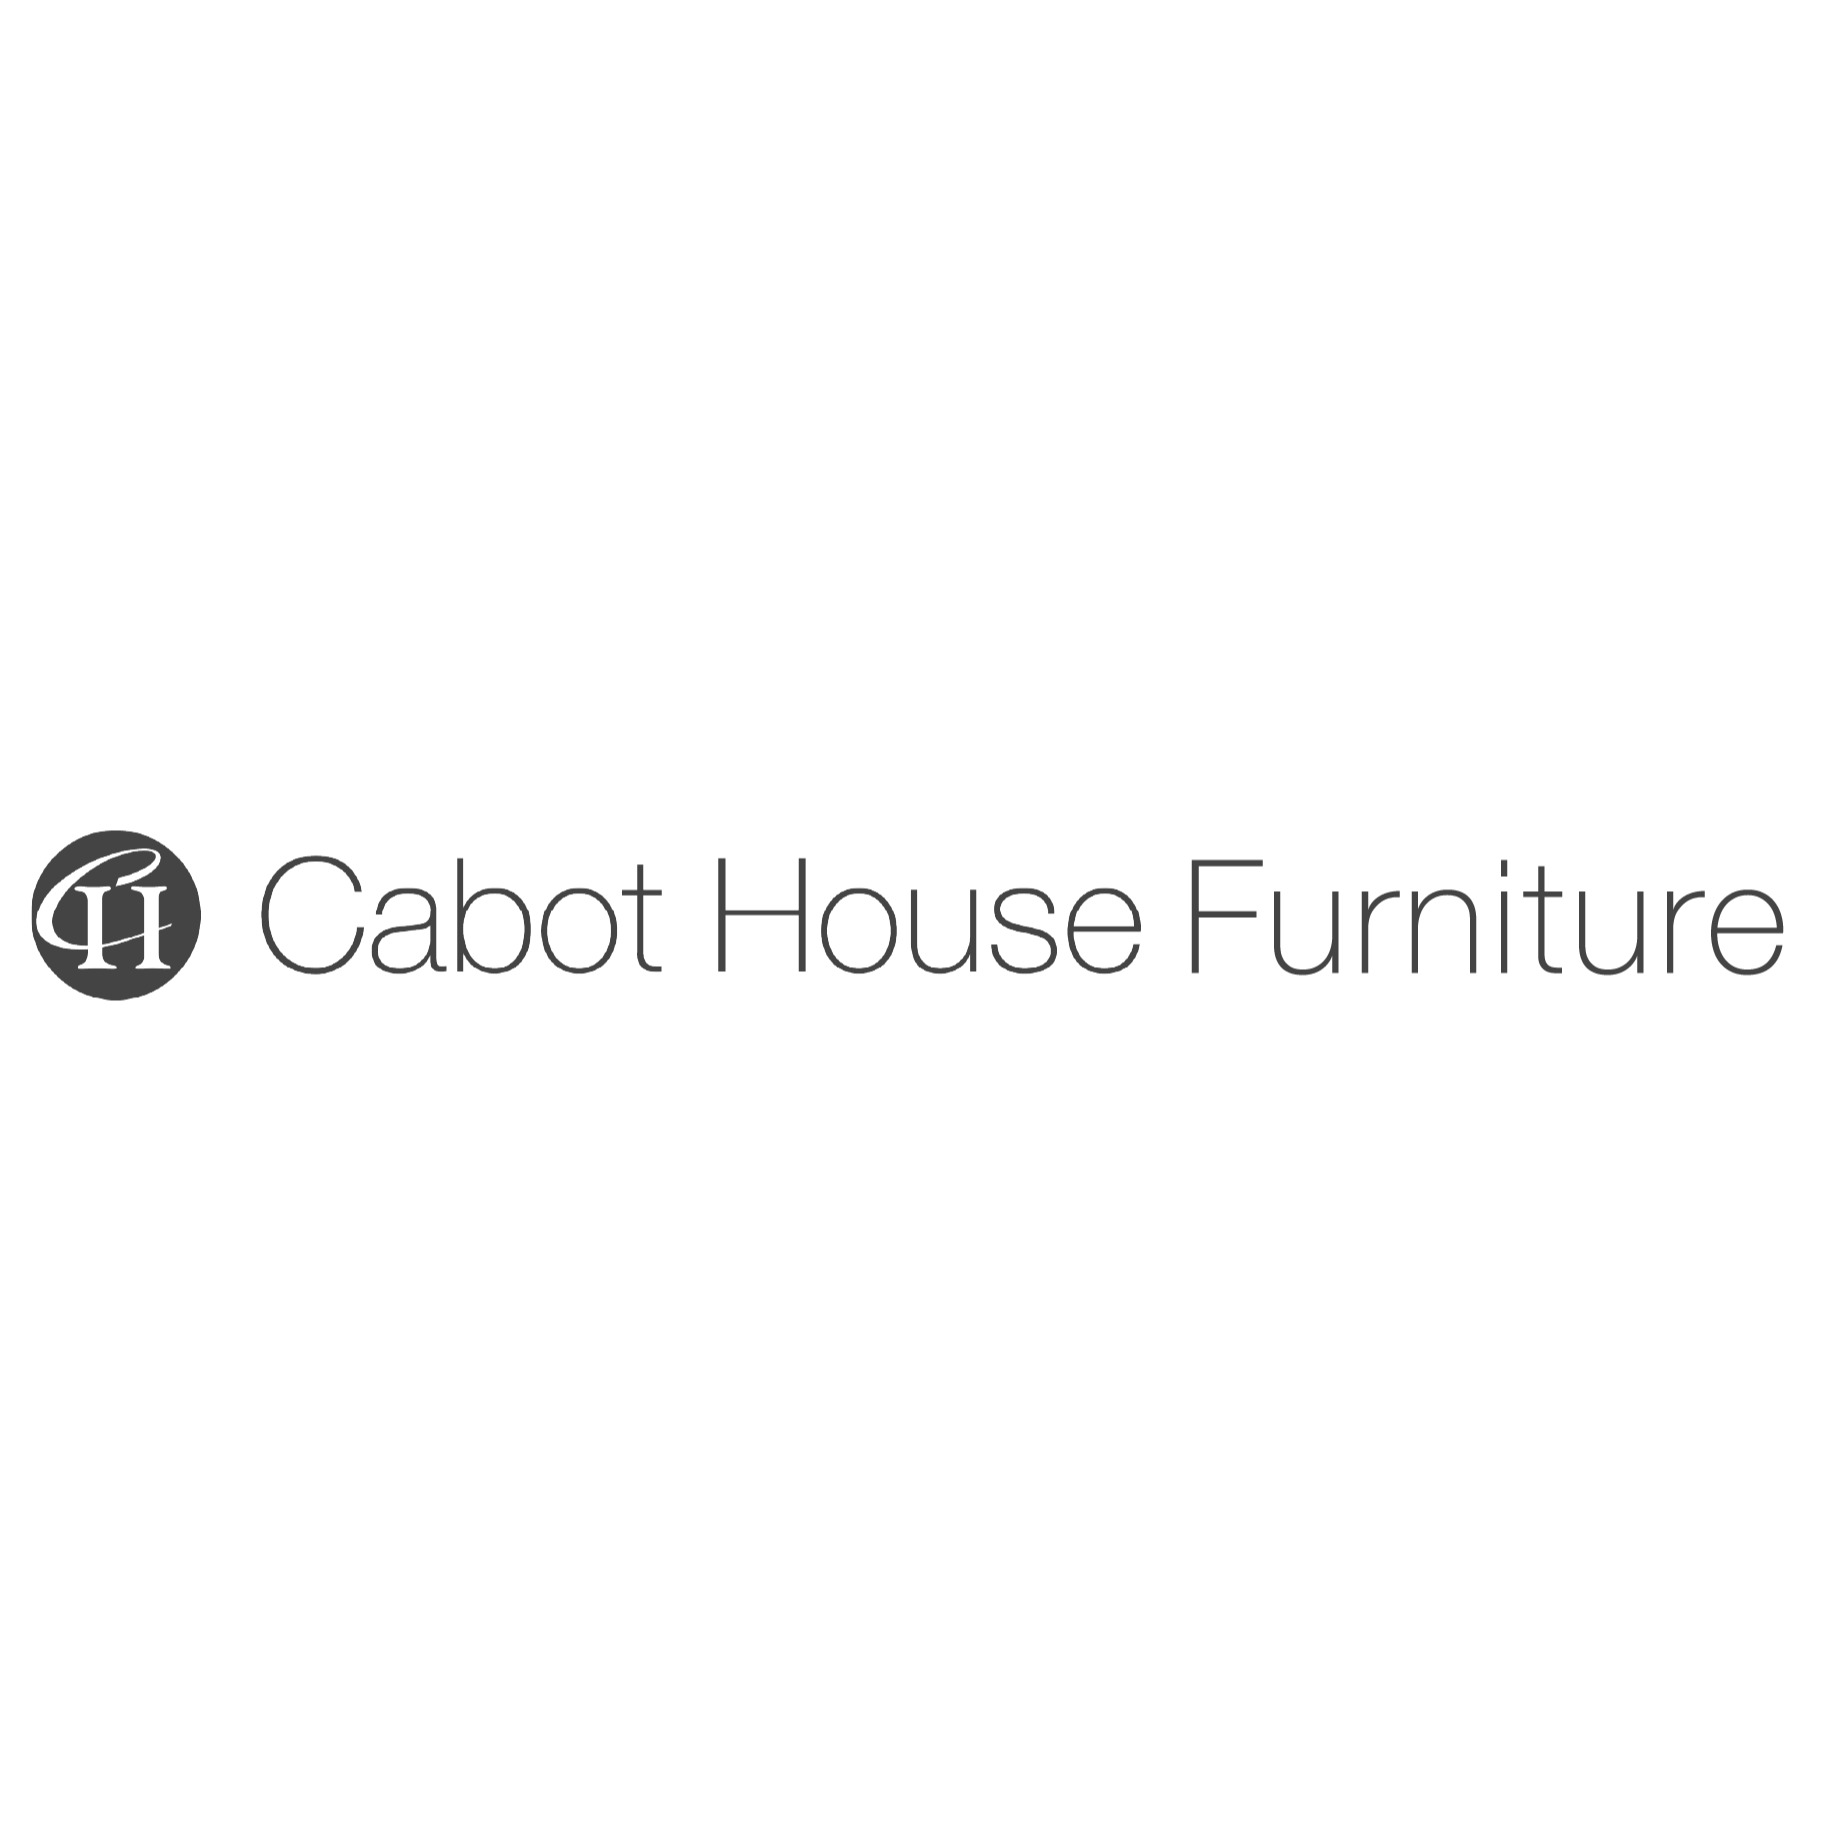 Cabot House Furniture & Design